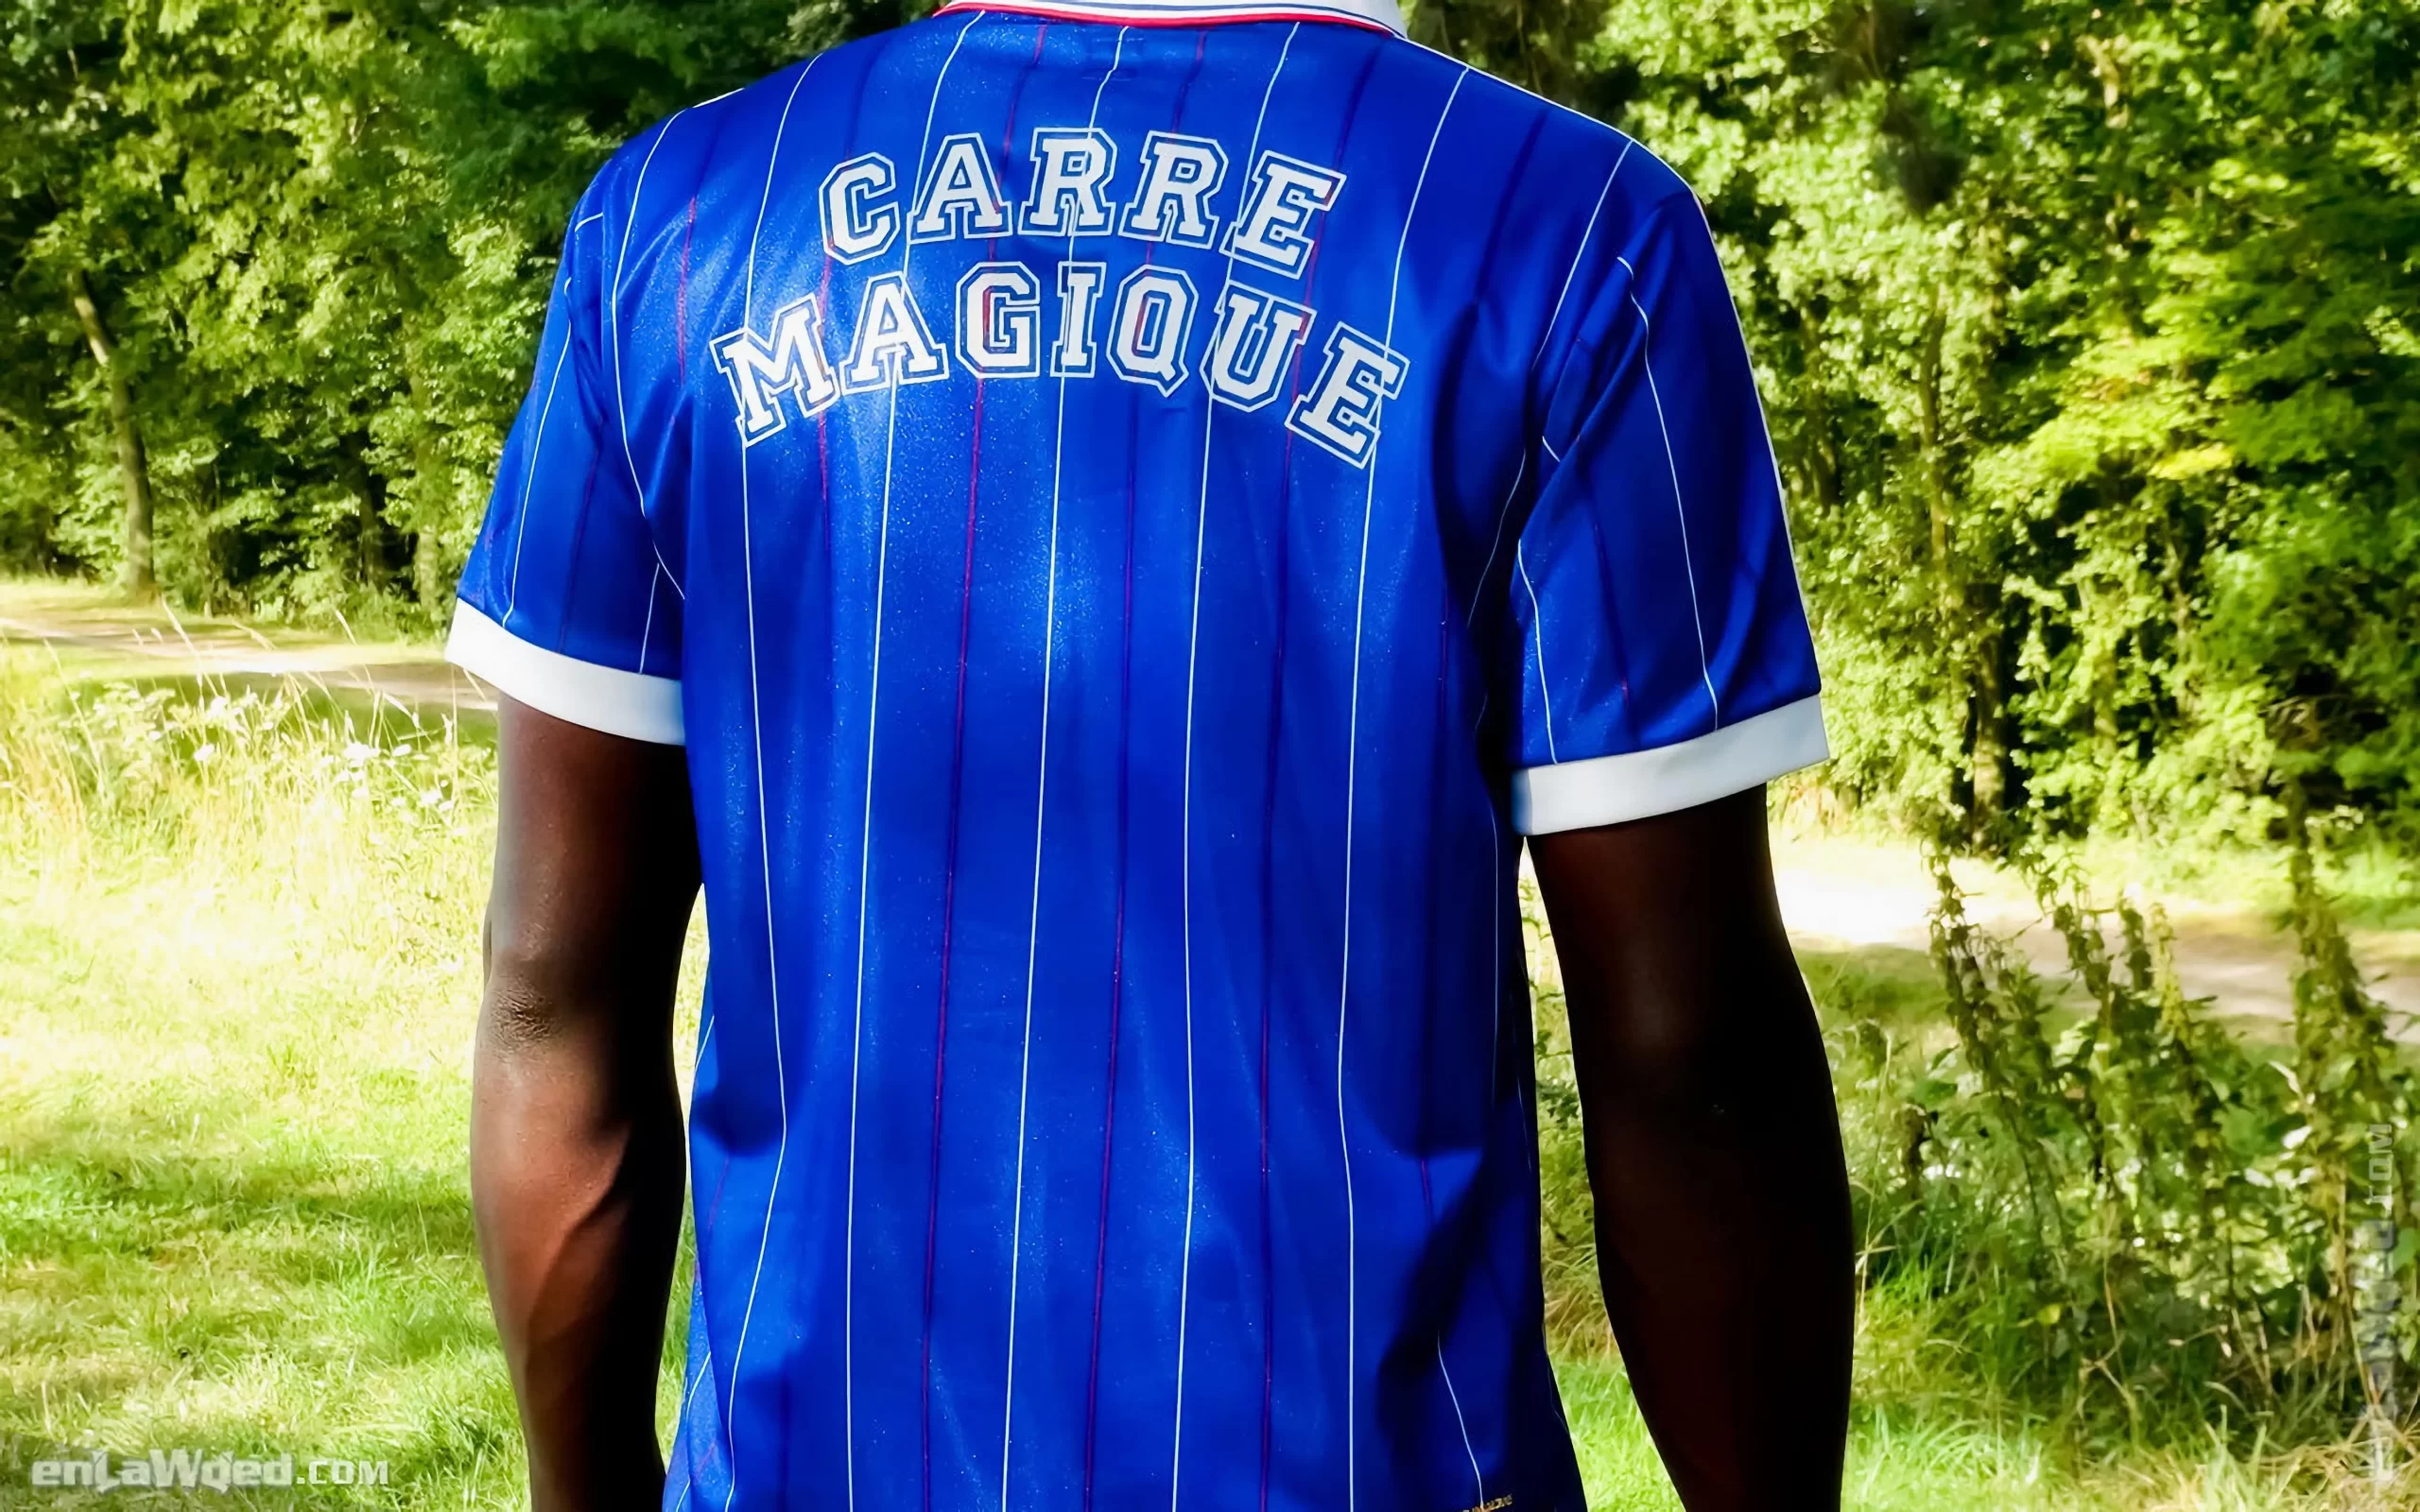 Men’s 2005 France ’82 Carre Magique Jersey by Adidas: Devoted (EnLawded.com file #lmchk90384ip2y122988kg9st)